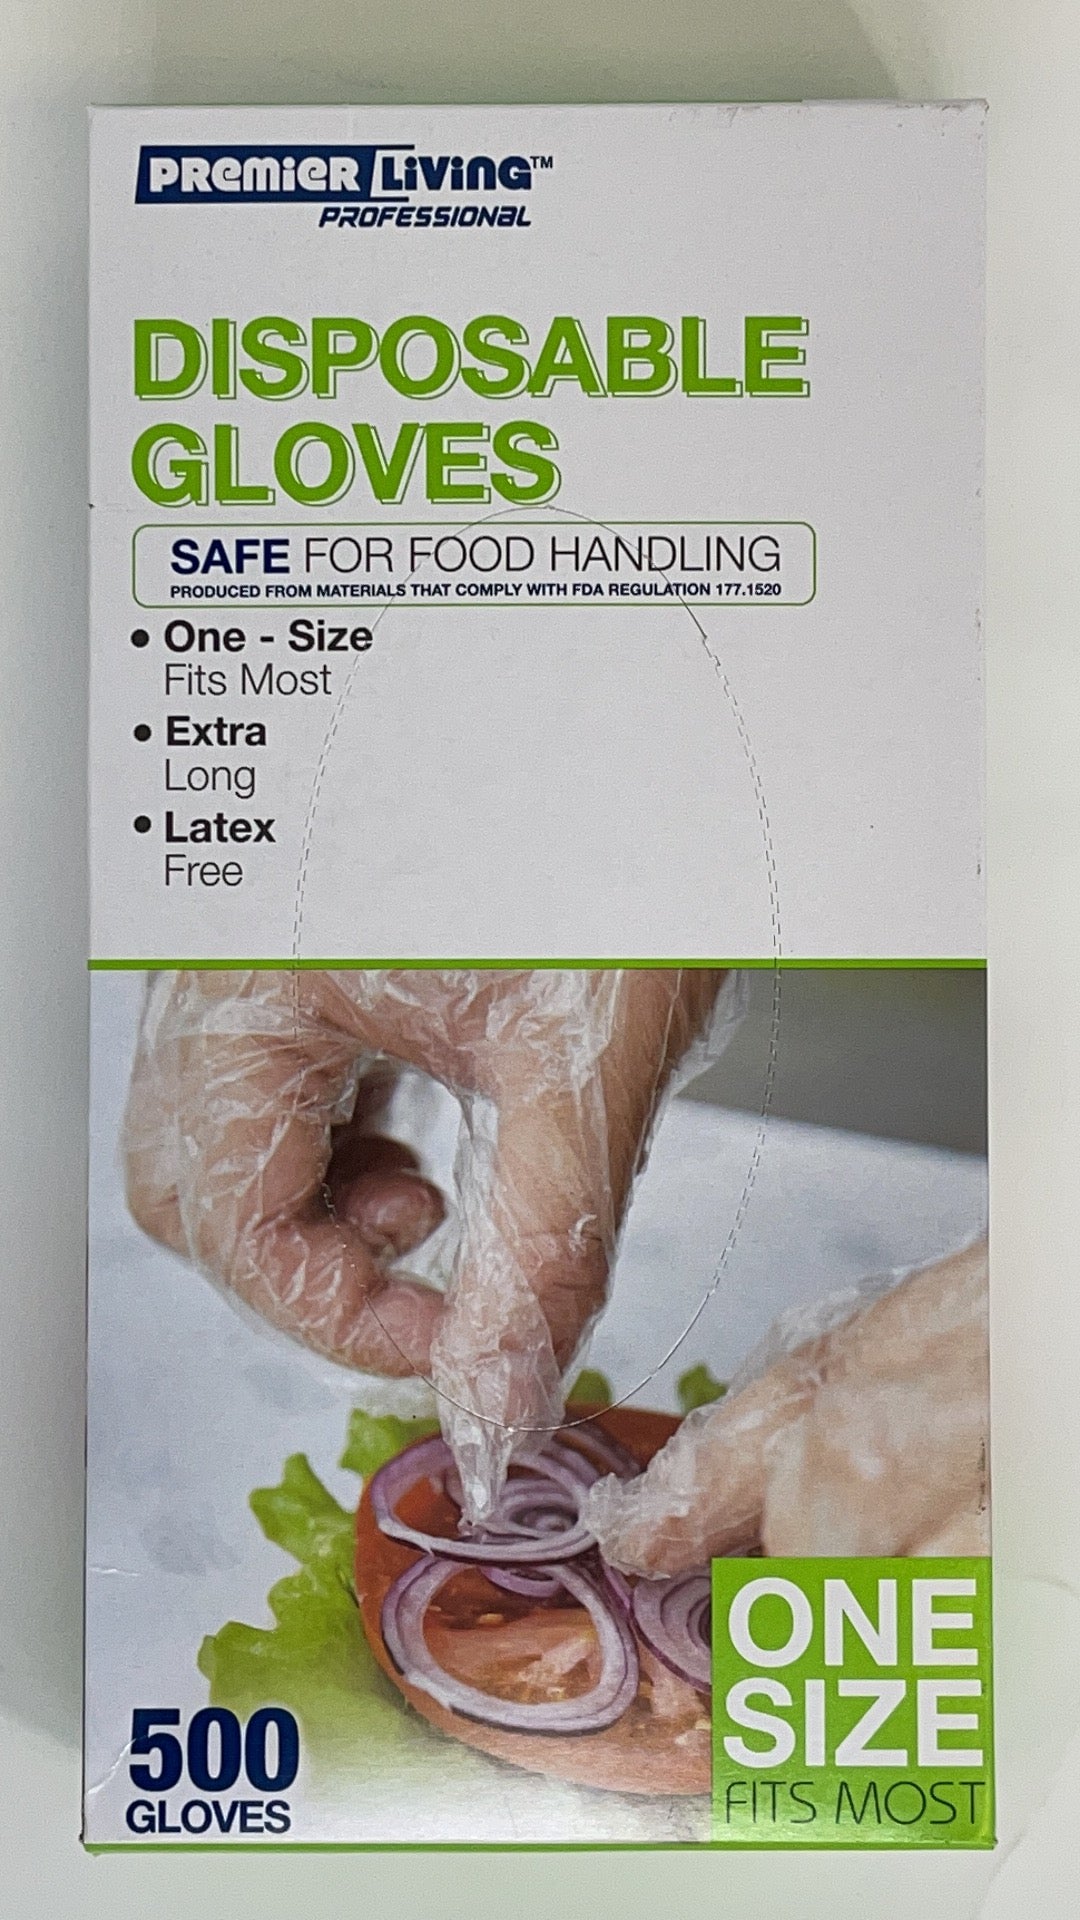 Premier Living Professional Disposable Gloves 500 Gloves